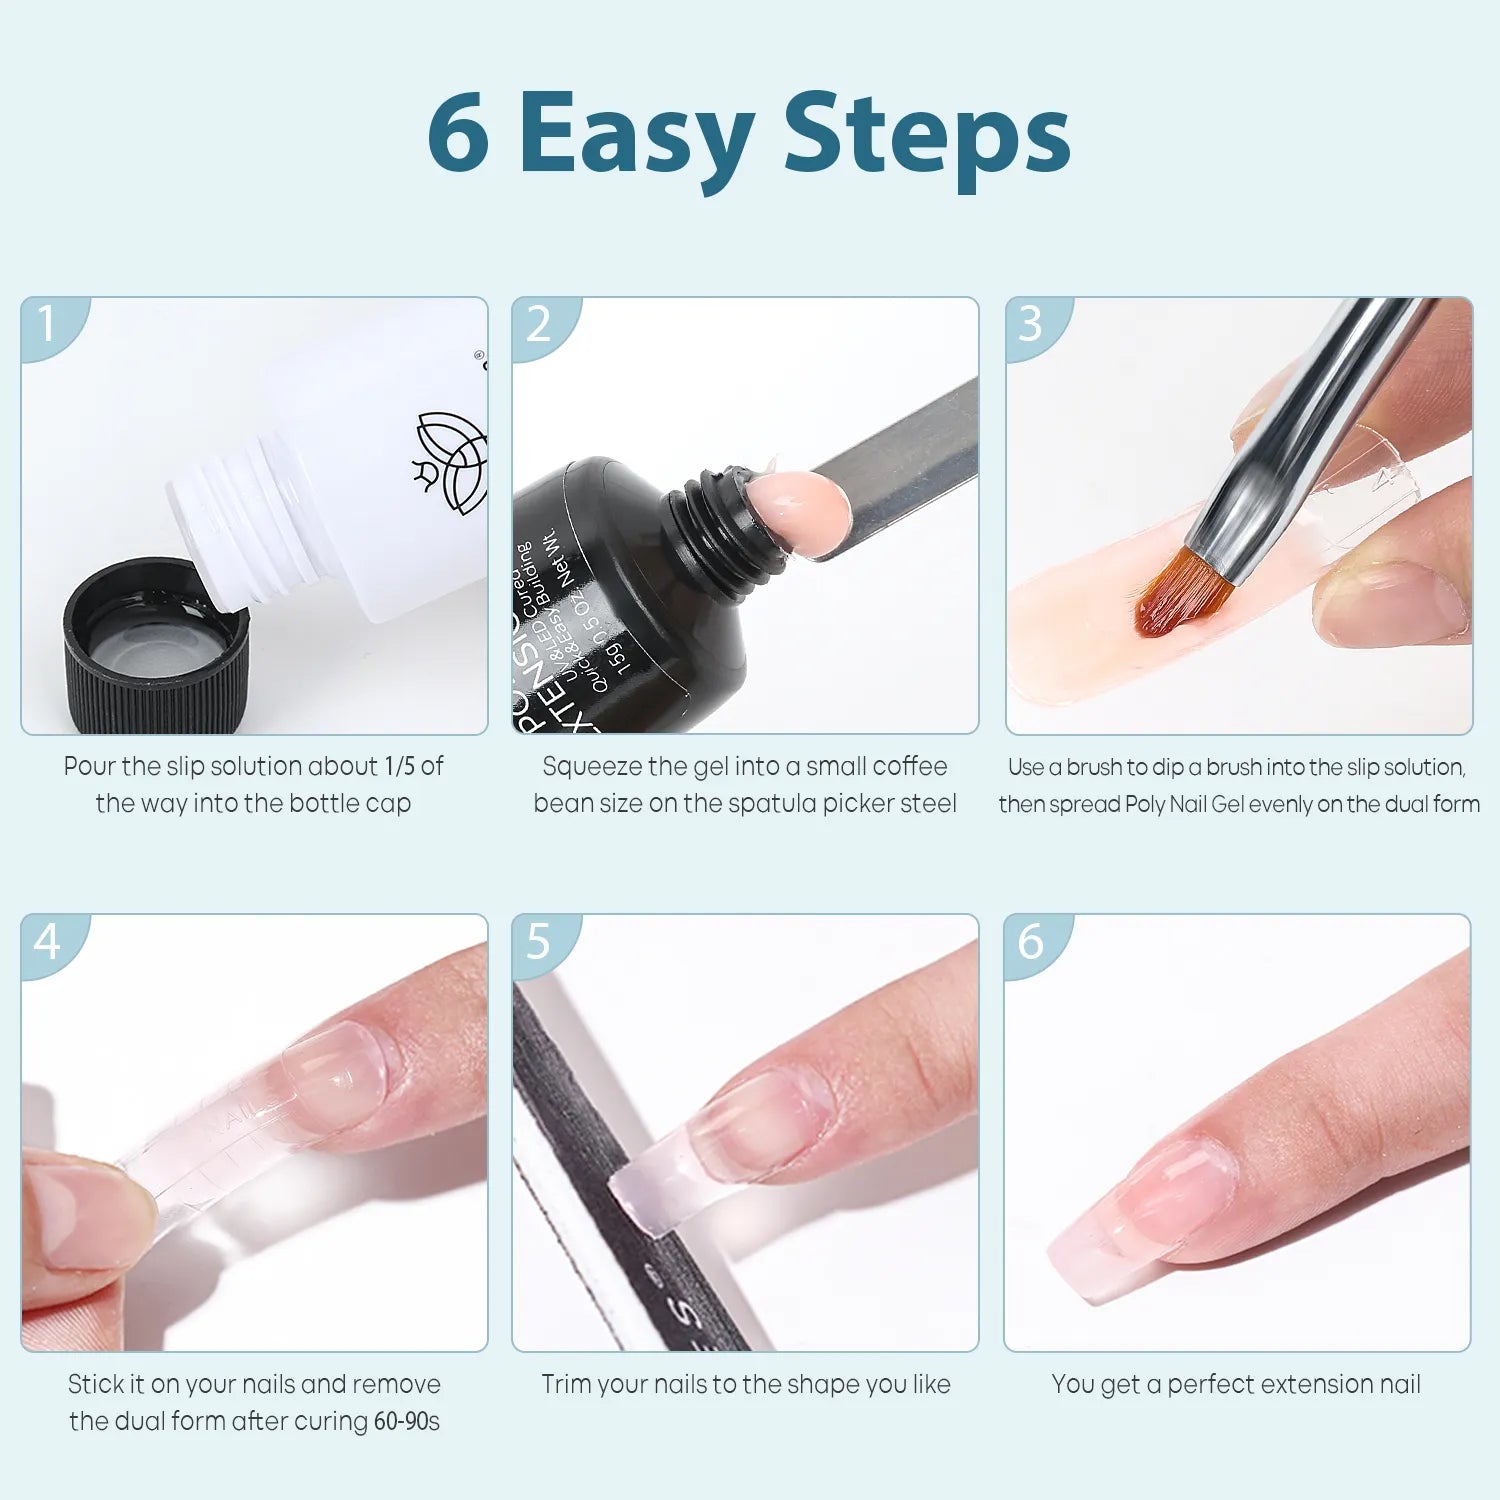 6Pcs Slip Solution 120ml Dual Head Brush Nail Tools Kit For Poly Nail Extension Gel